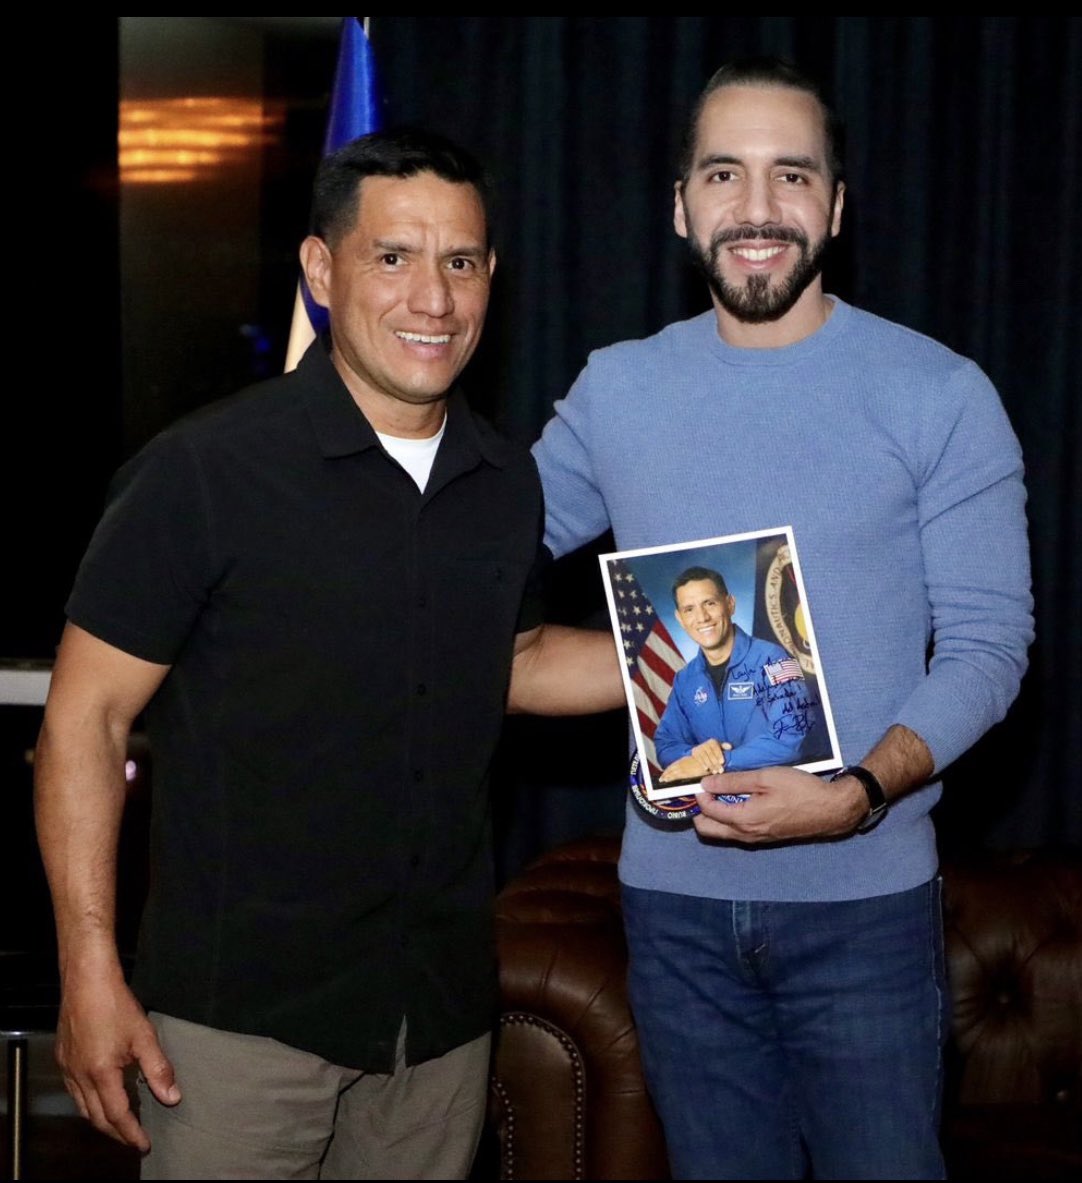 Astronaut Frank Rubio meets President Nayib Bukele for the first time. Salvadoran Pride! 🇸🇻